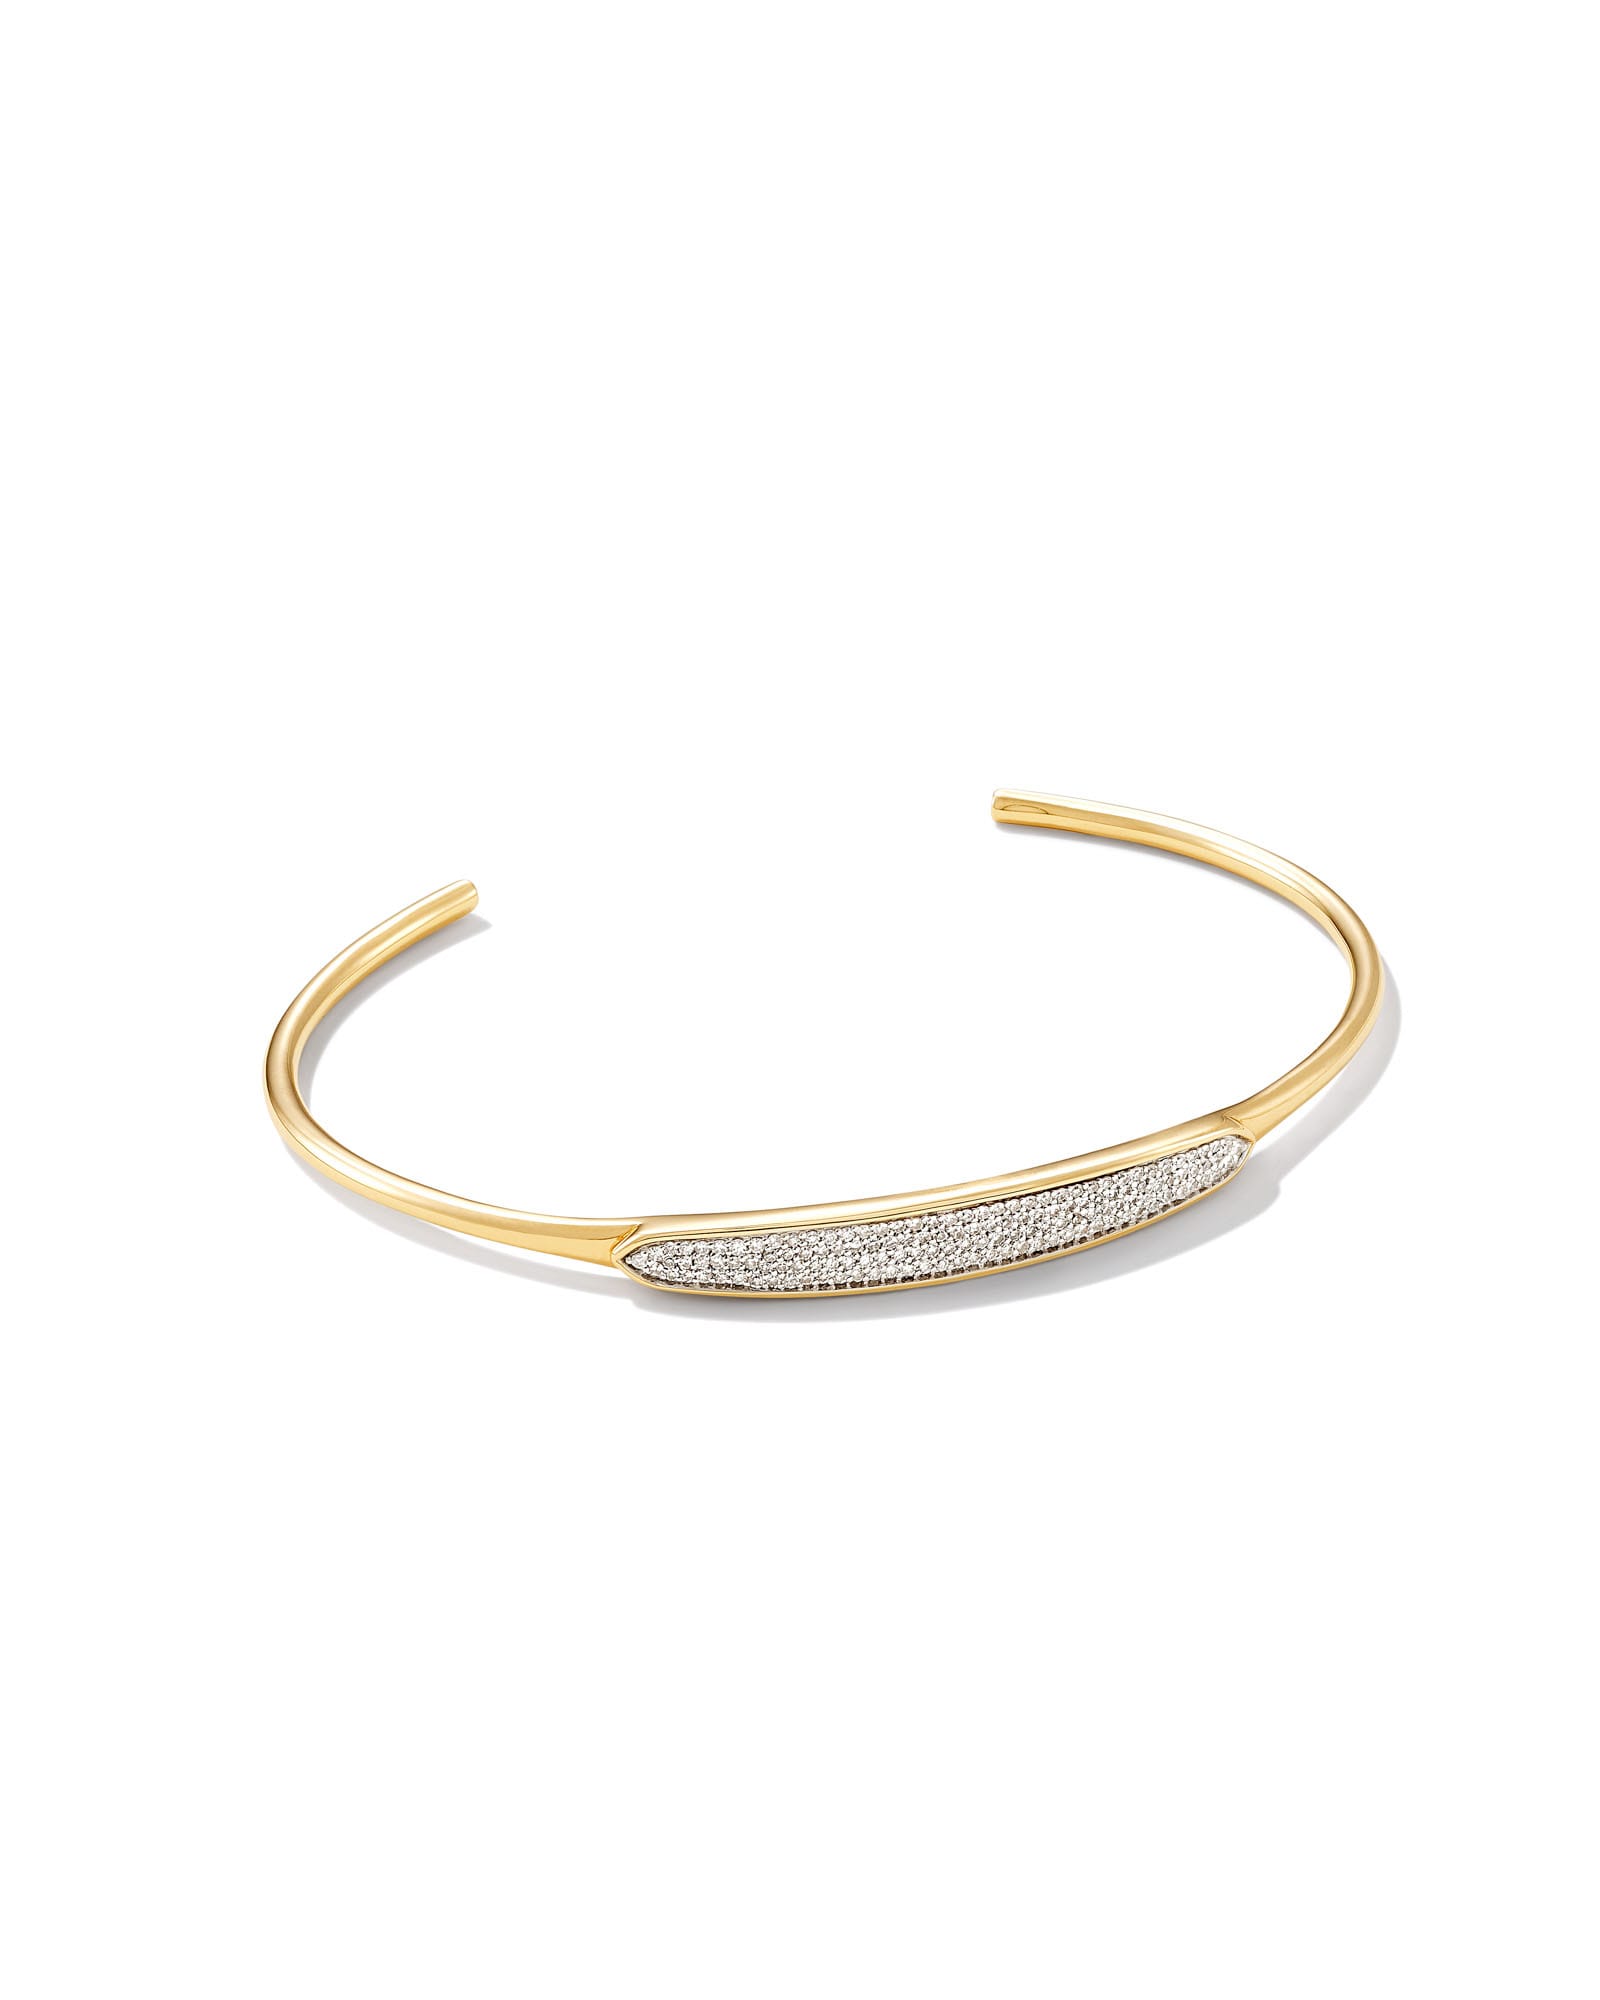 Marisa 14k White Gold Statement Cuff Bracelet in White Diamond